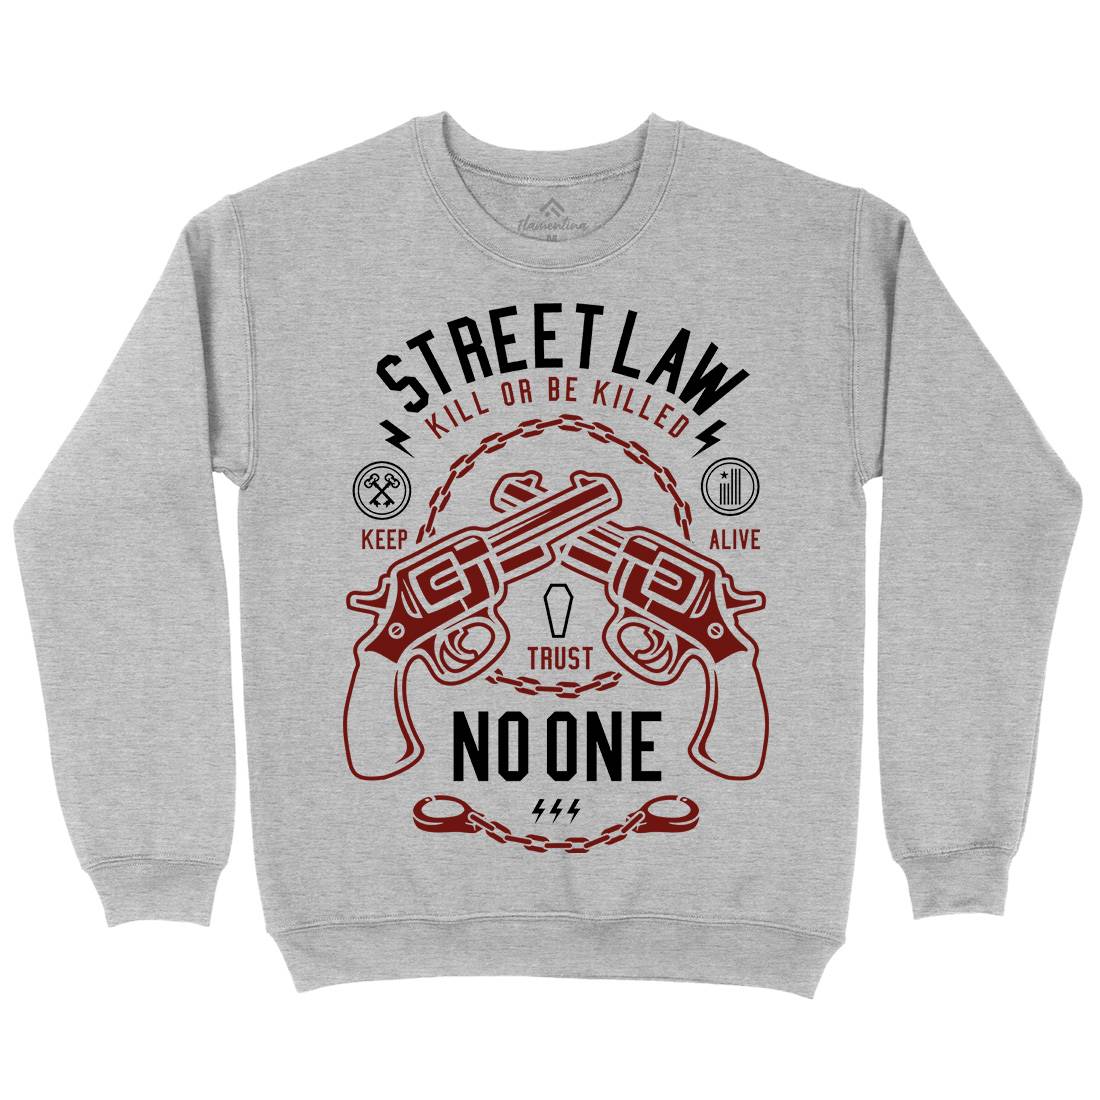 Street Law Kids Crew Neck Sweatshirt Quotes A286